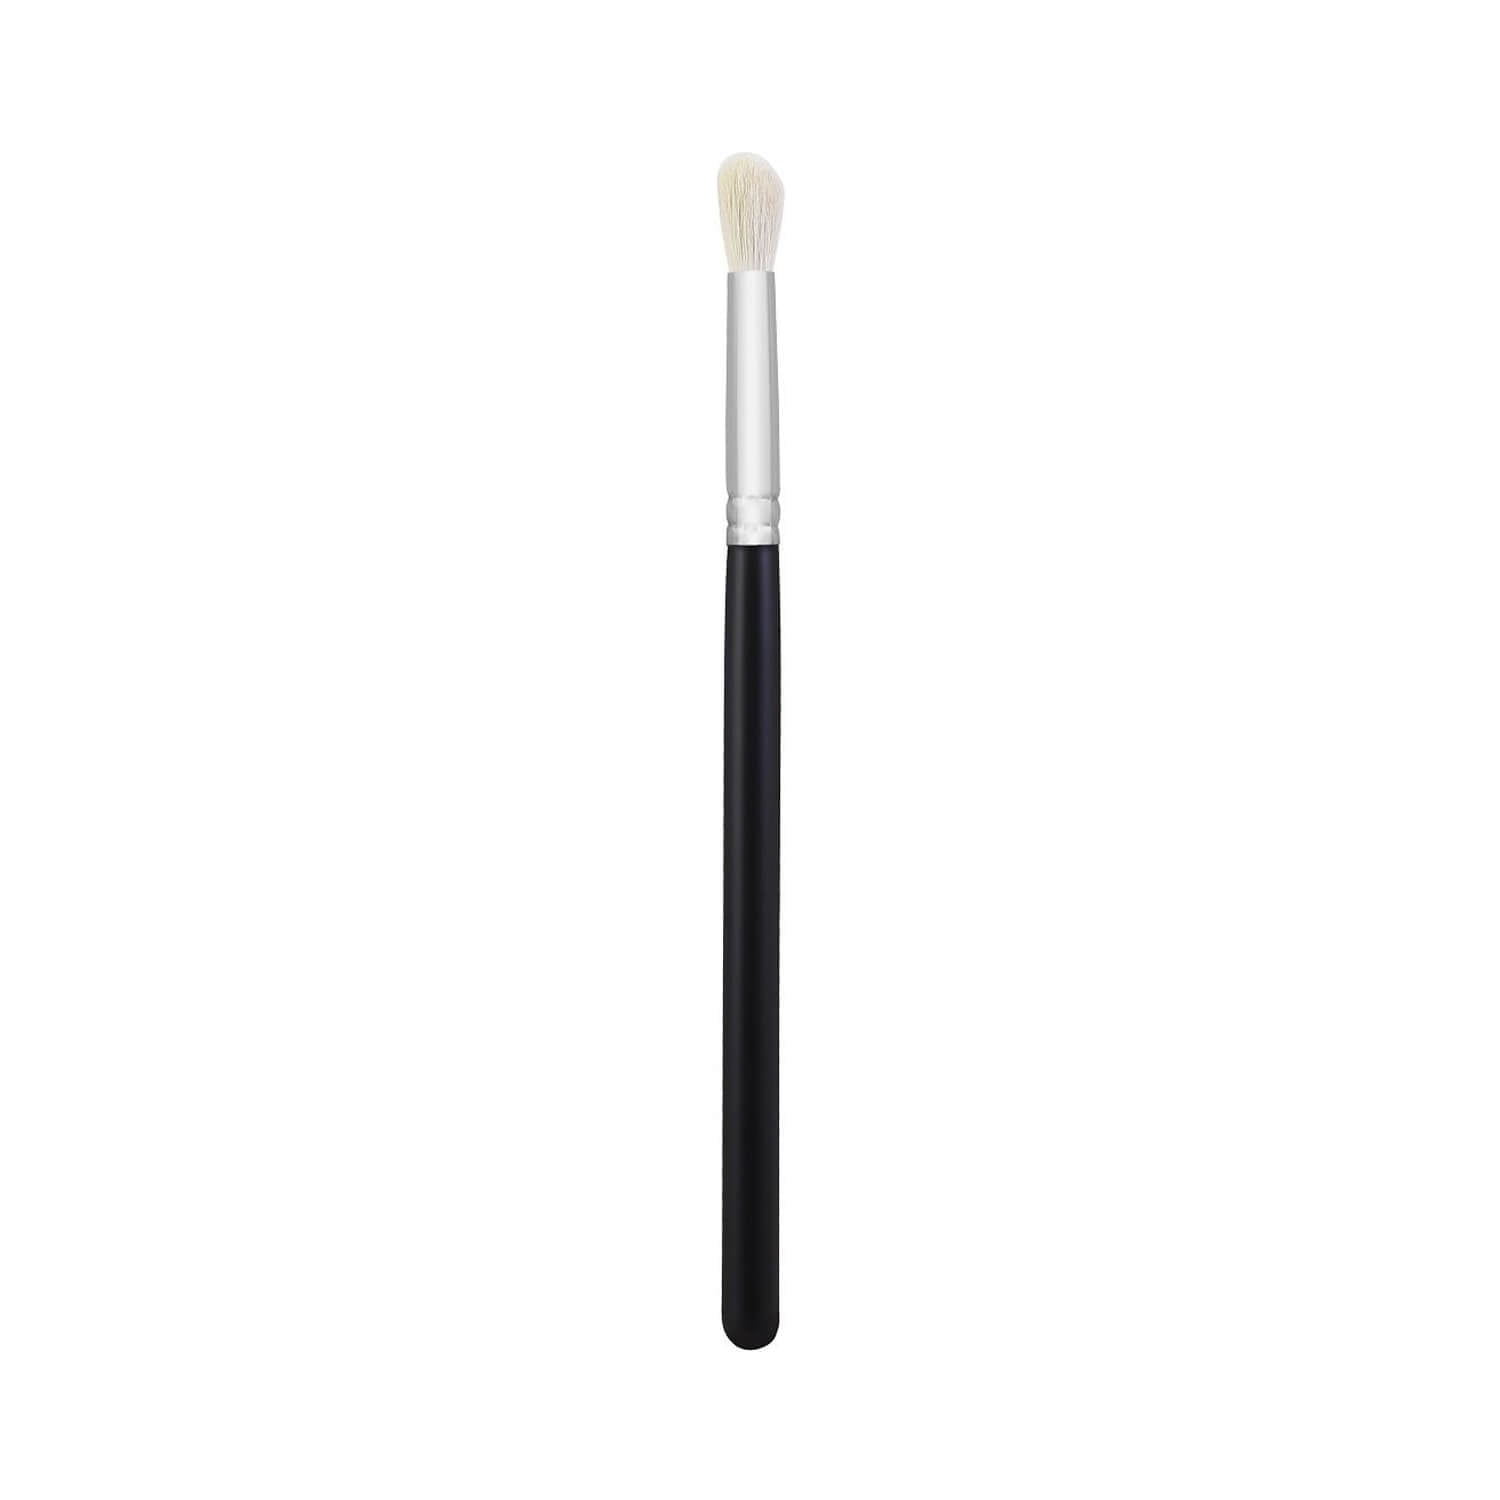 Morphe Cosmetics M441 Pro Firm Blending Crease Brush